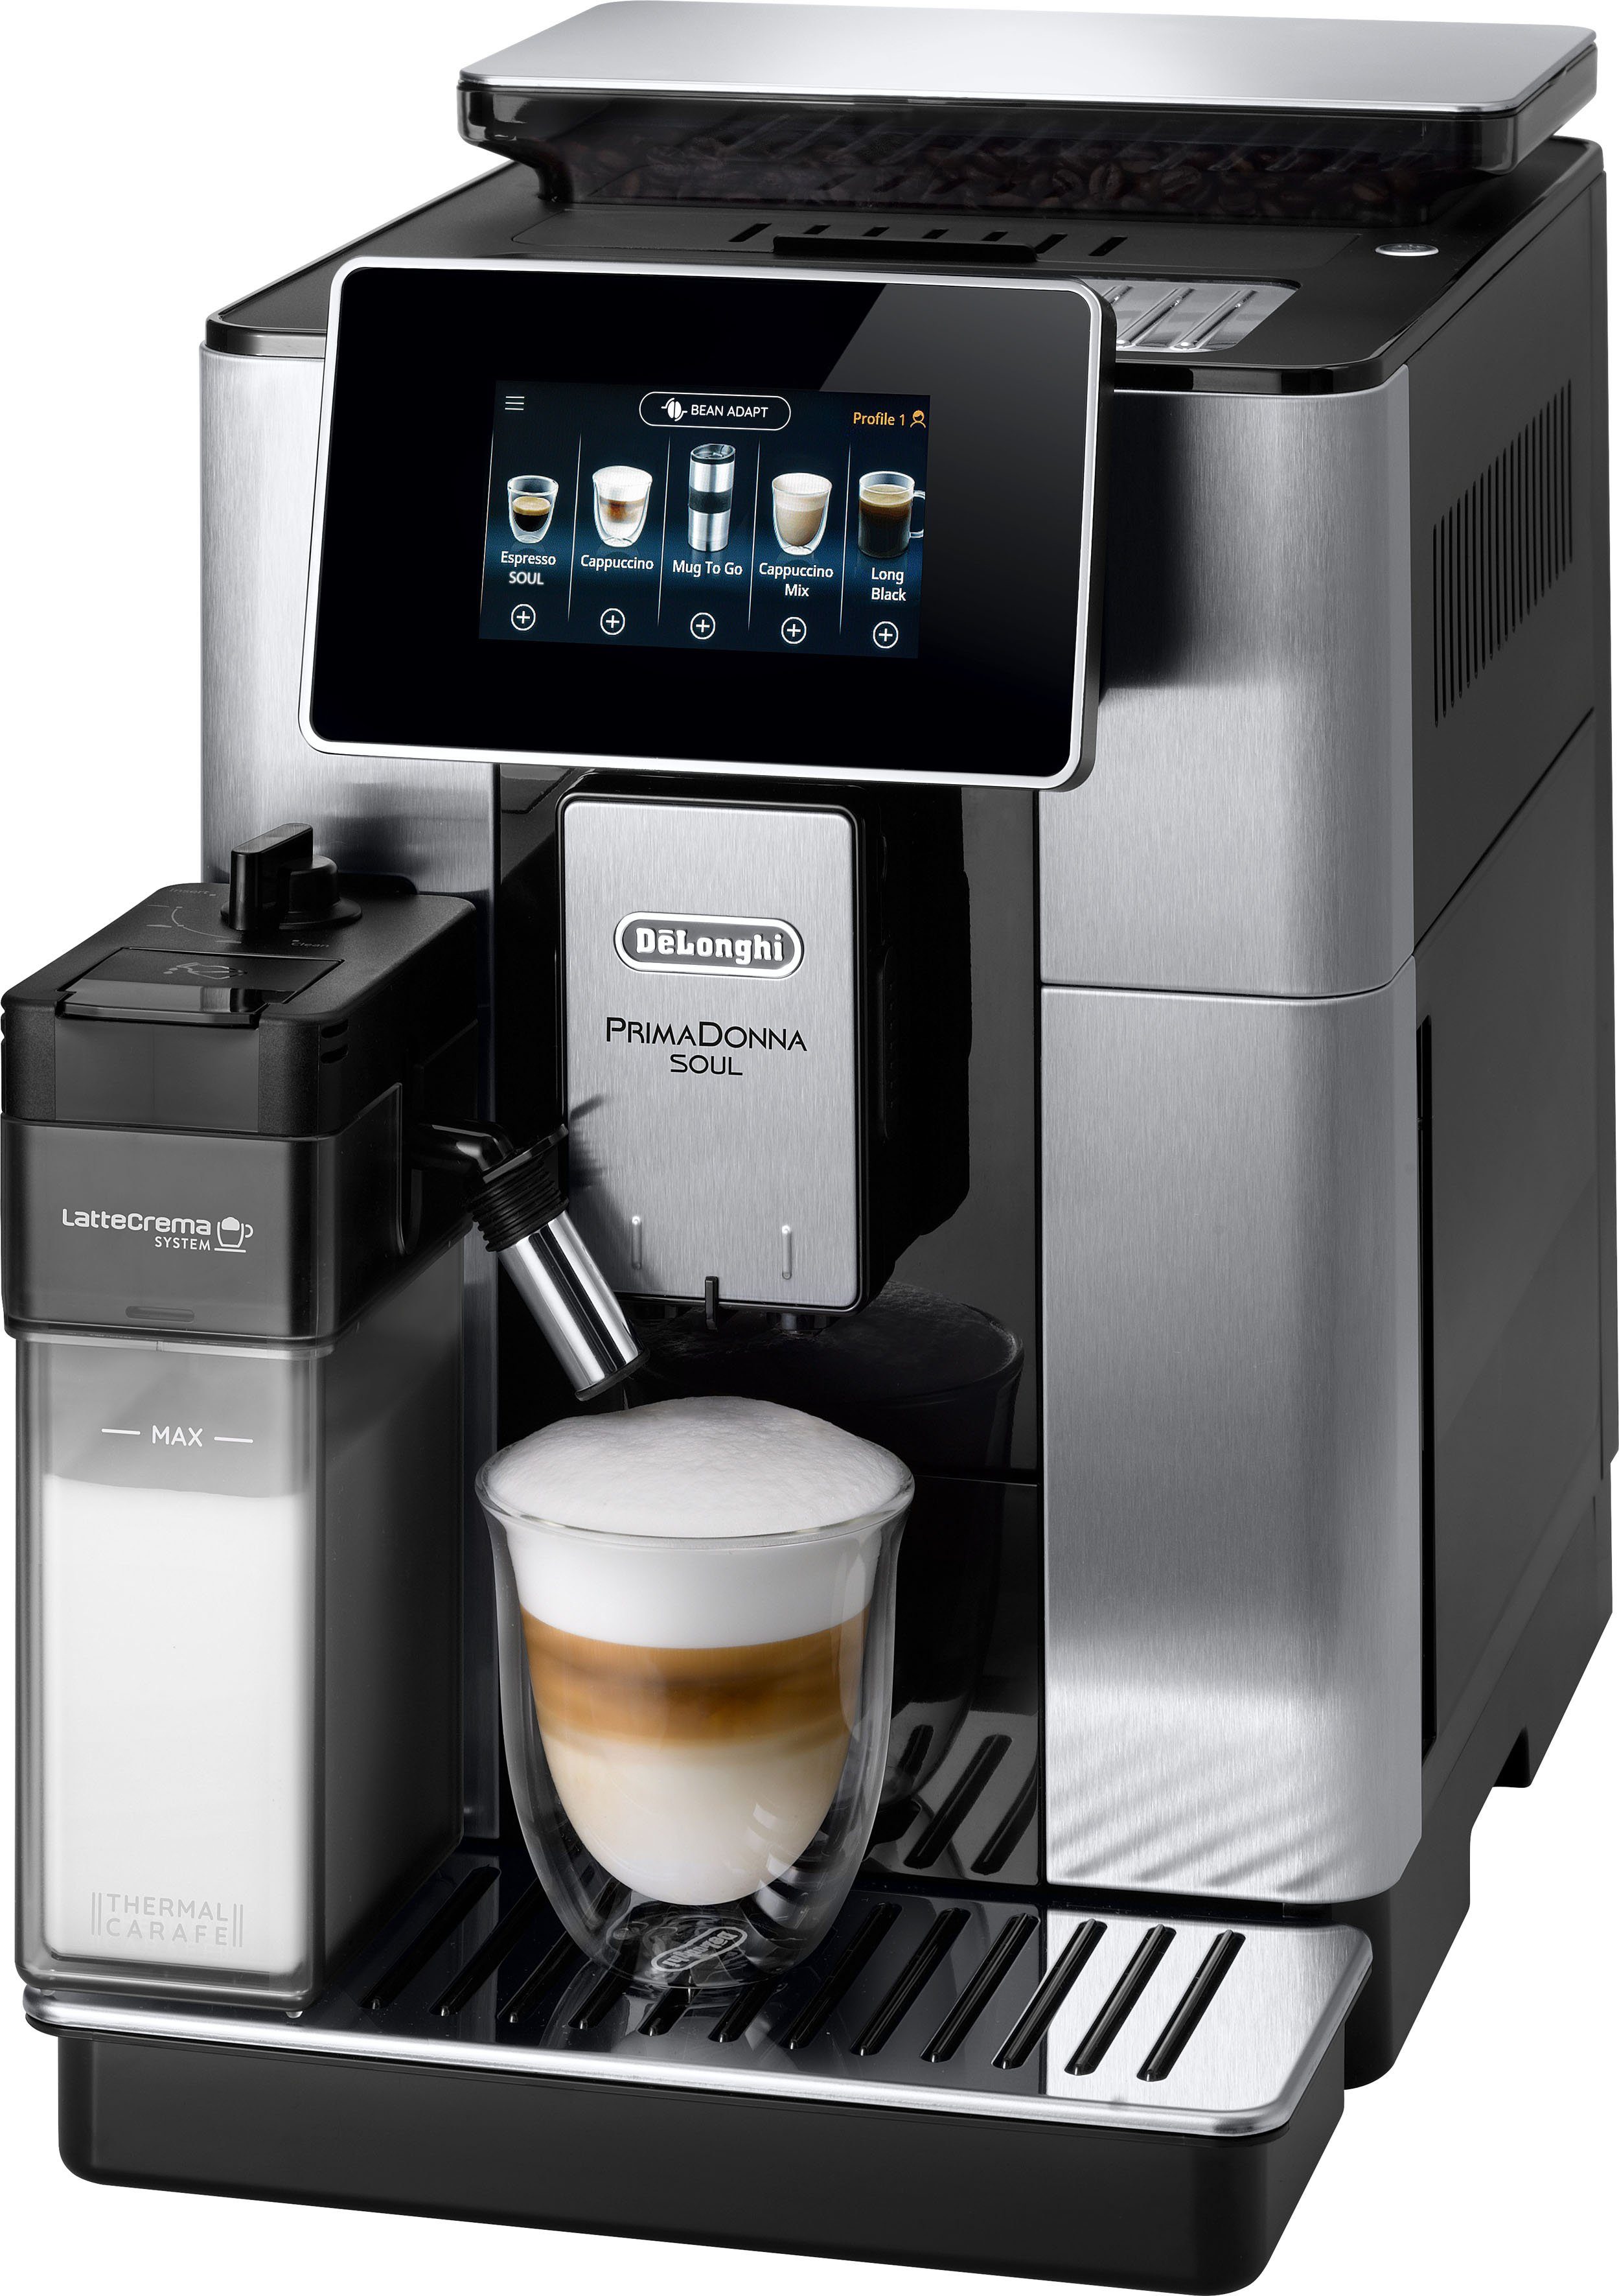 ECAM 29,99 im De'Longhi € UVP Gläser-Set 610.75.MB, inkl. 46,90 Soul Kaffeevollautomat von + UVP Wert PrimaDonna Kaffeekanne €